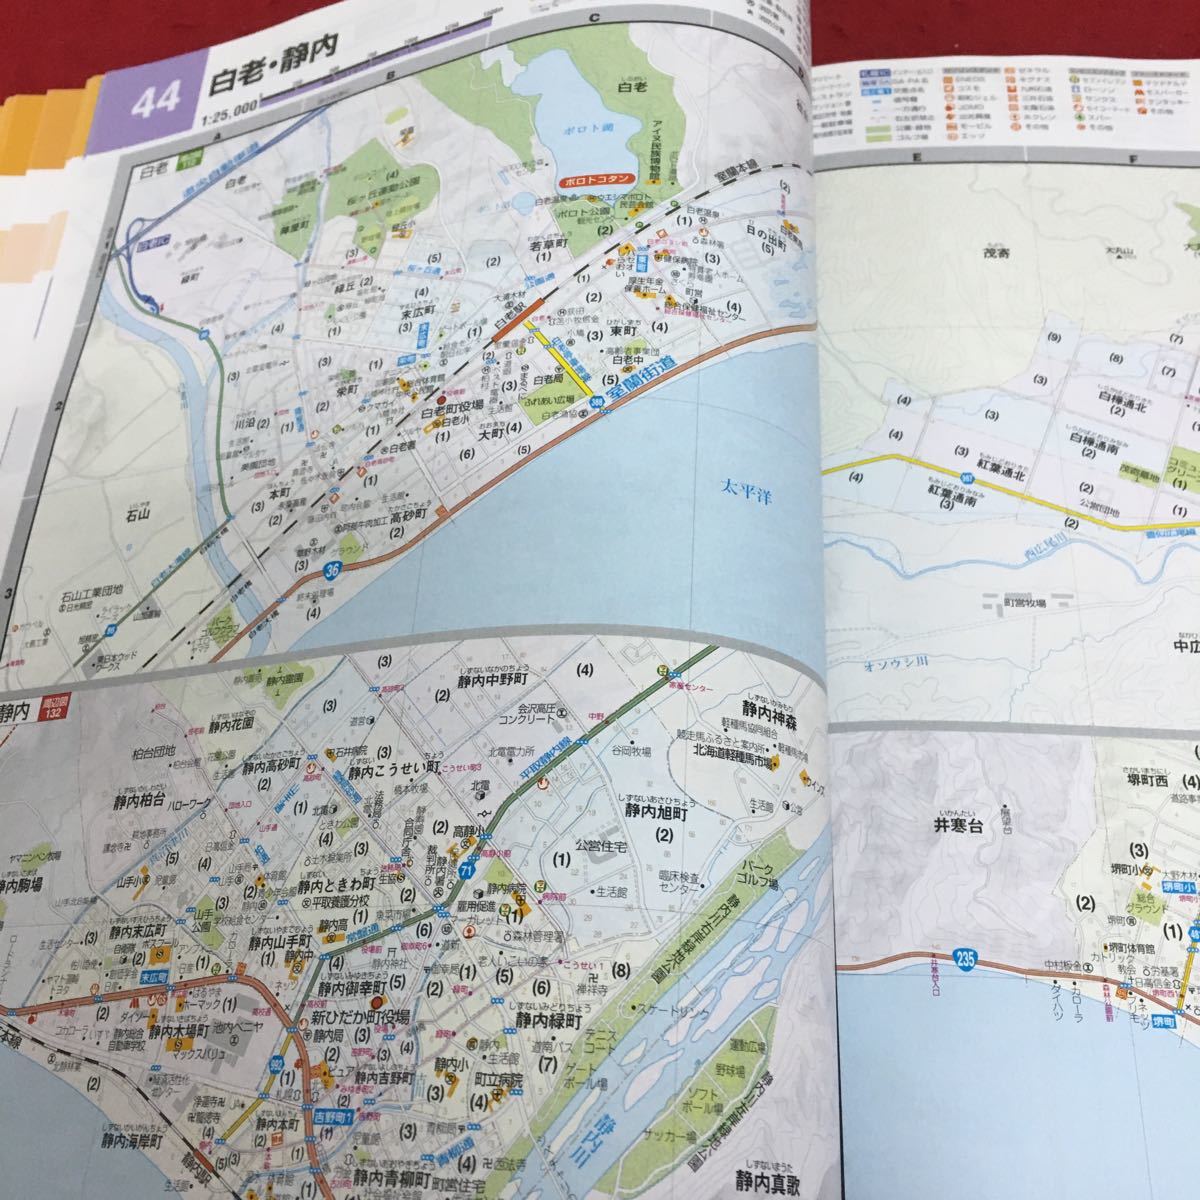 b-509 super Mapple Hokkaido карта дорог . документ фирма *4